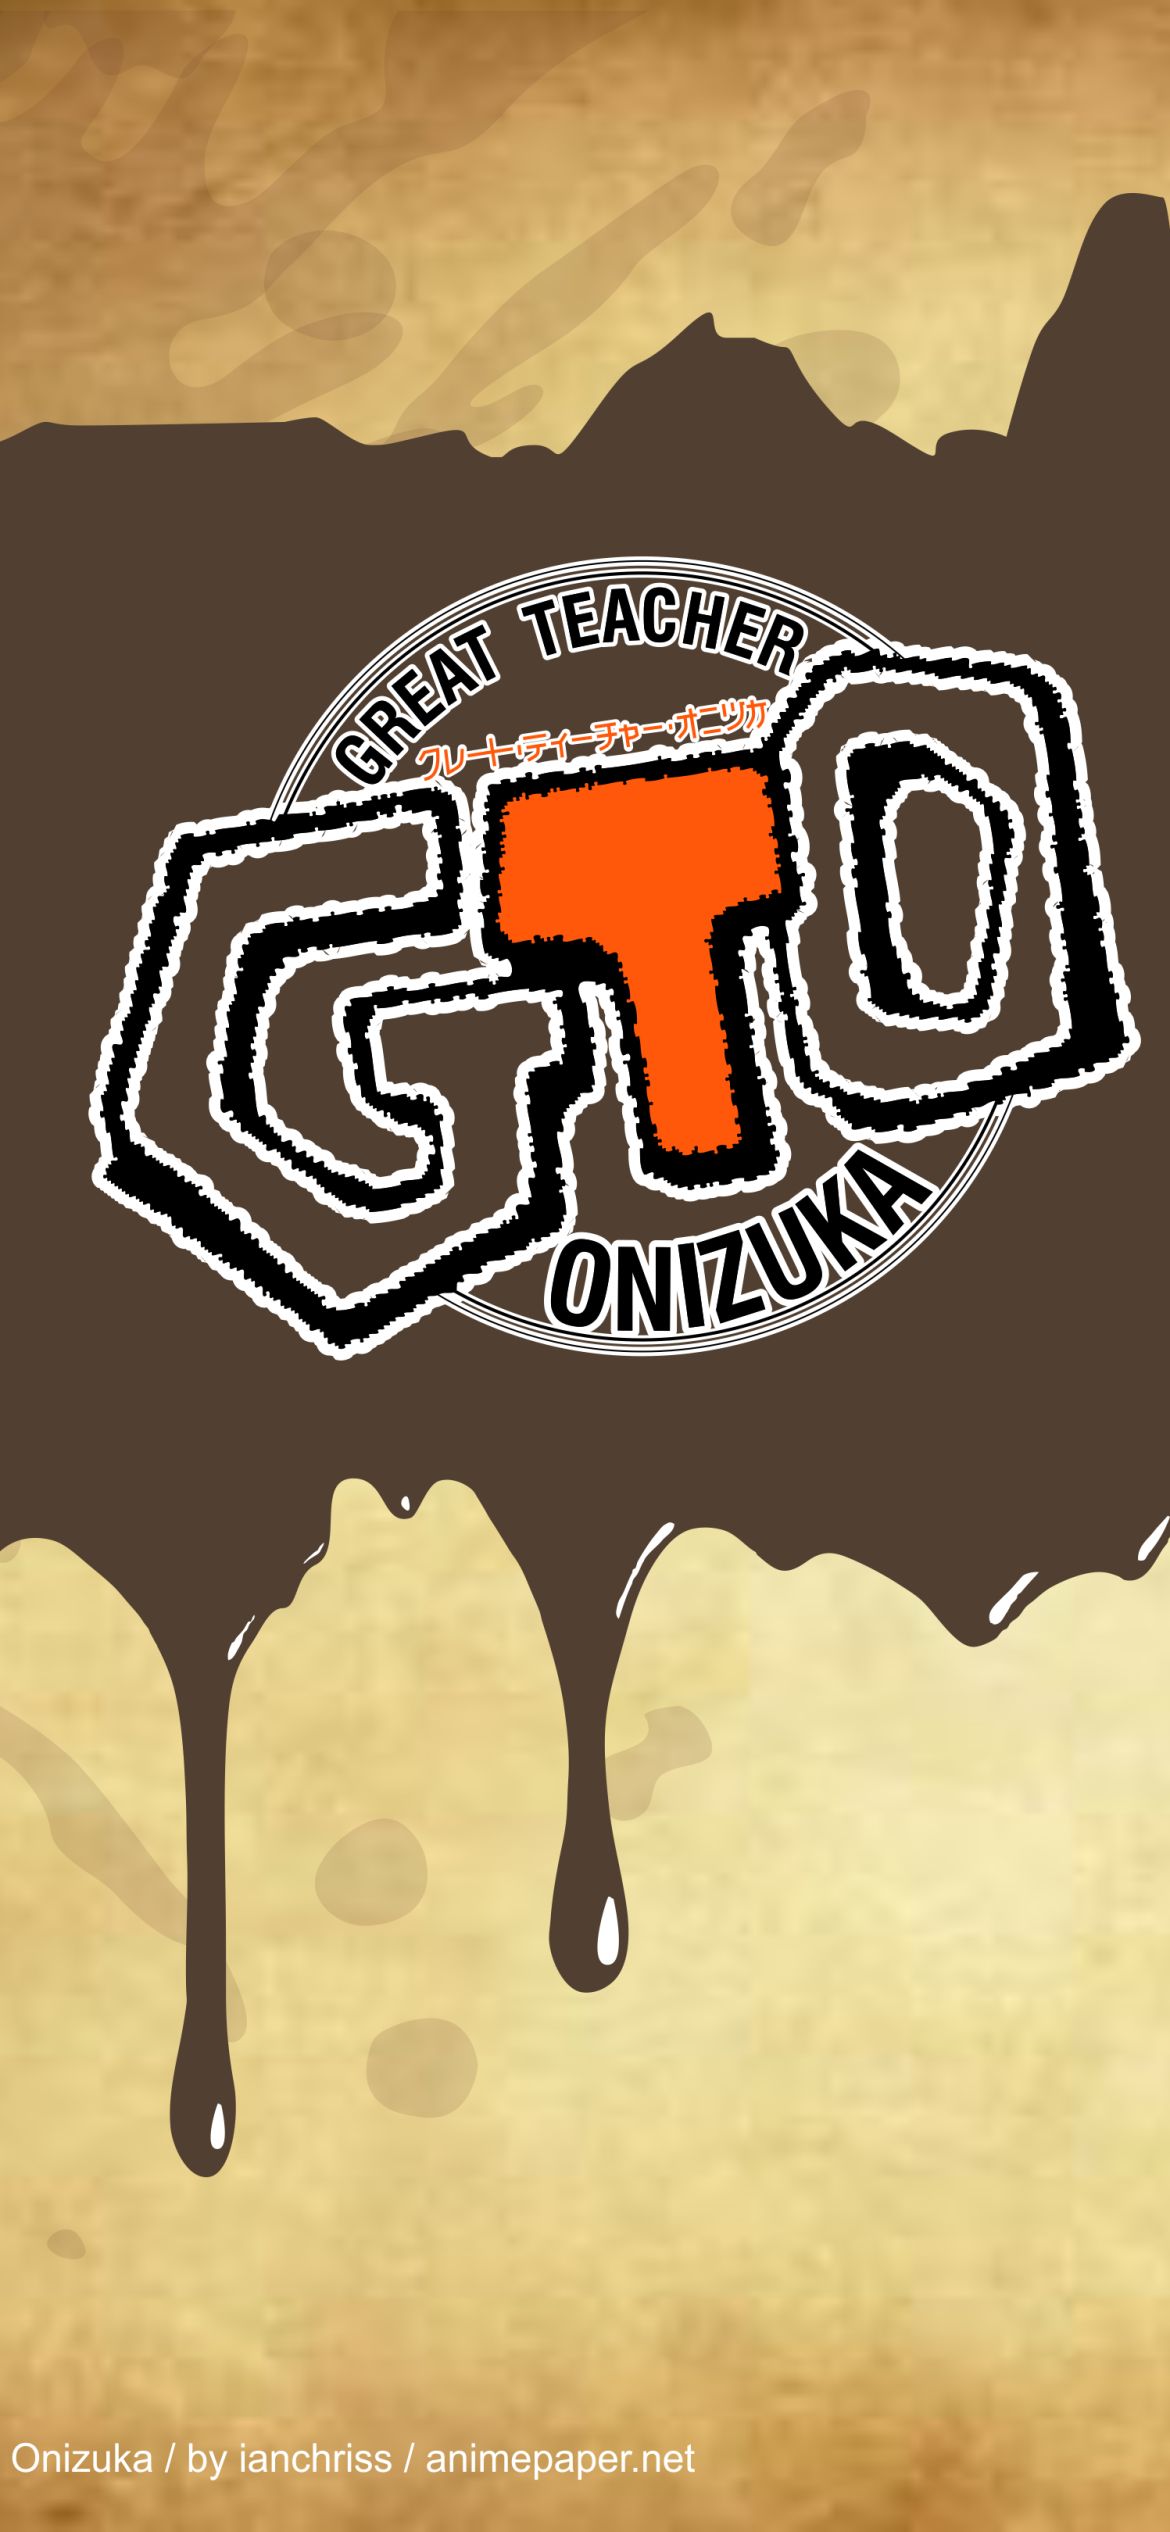 gto-great-teacher-onizuka